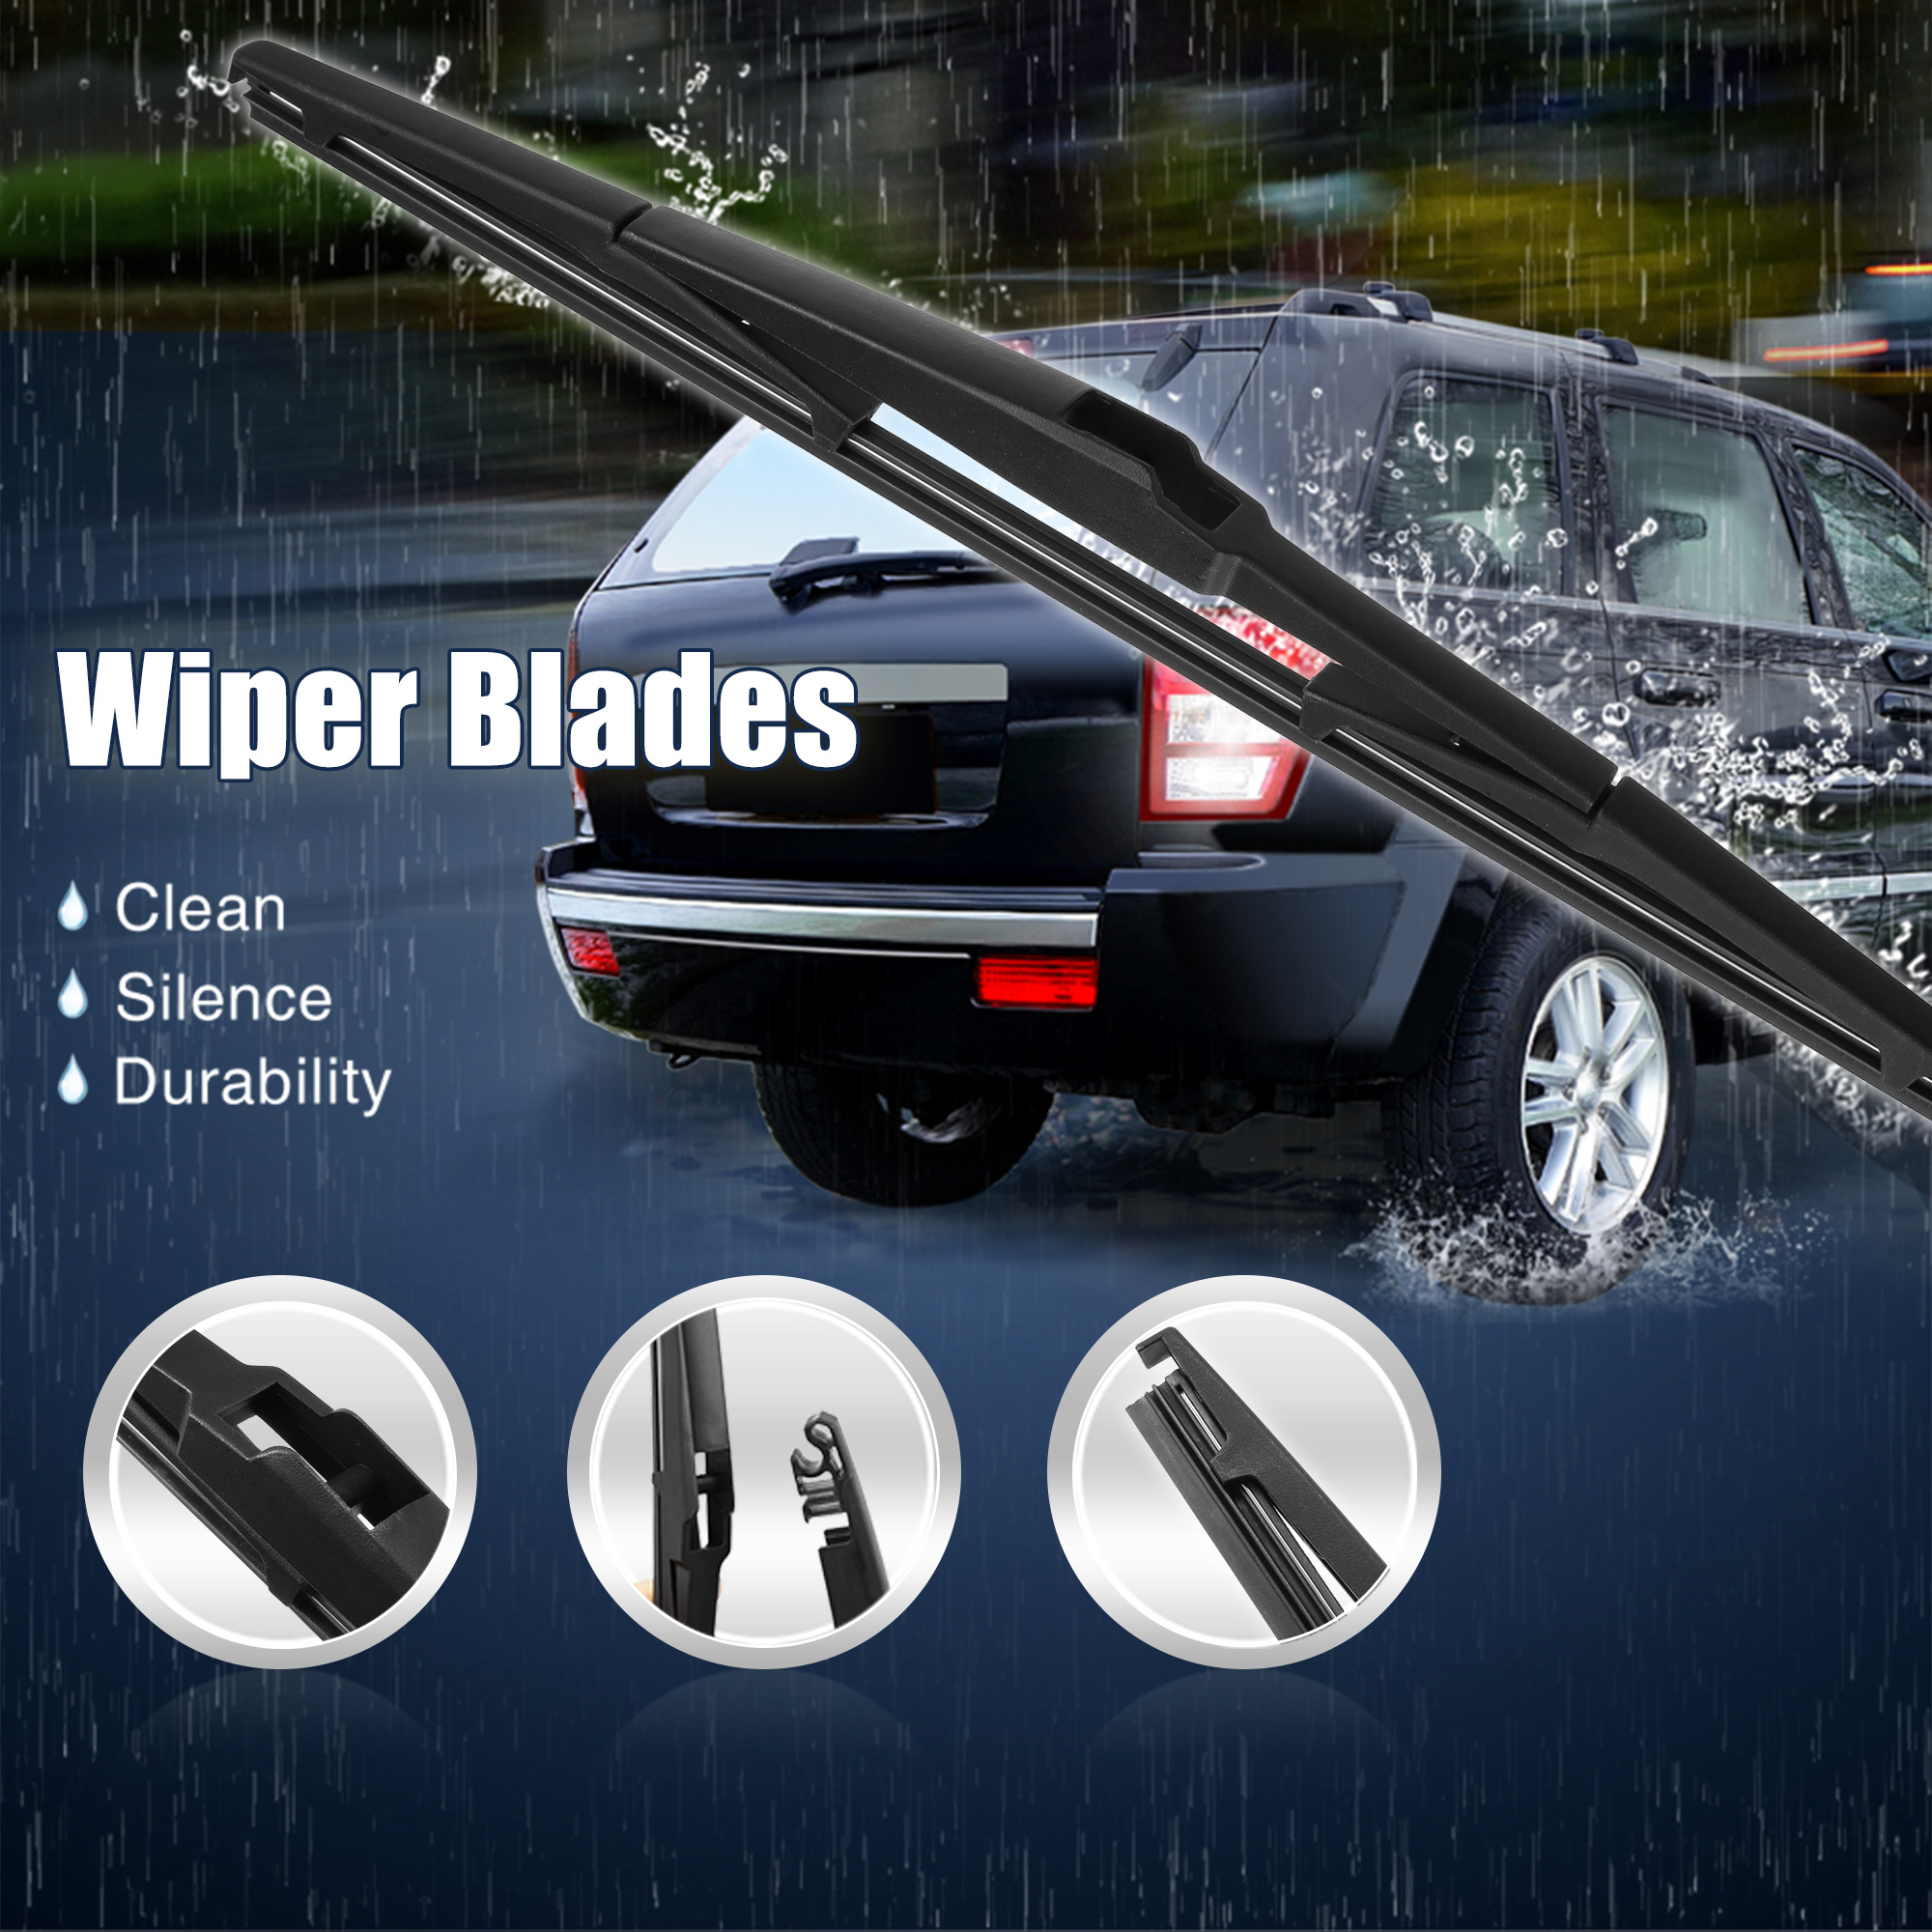 Unique Bargains 360mm 14" Rear Windshield Wiper Blades for Toyota Rubber Plastic Black